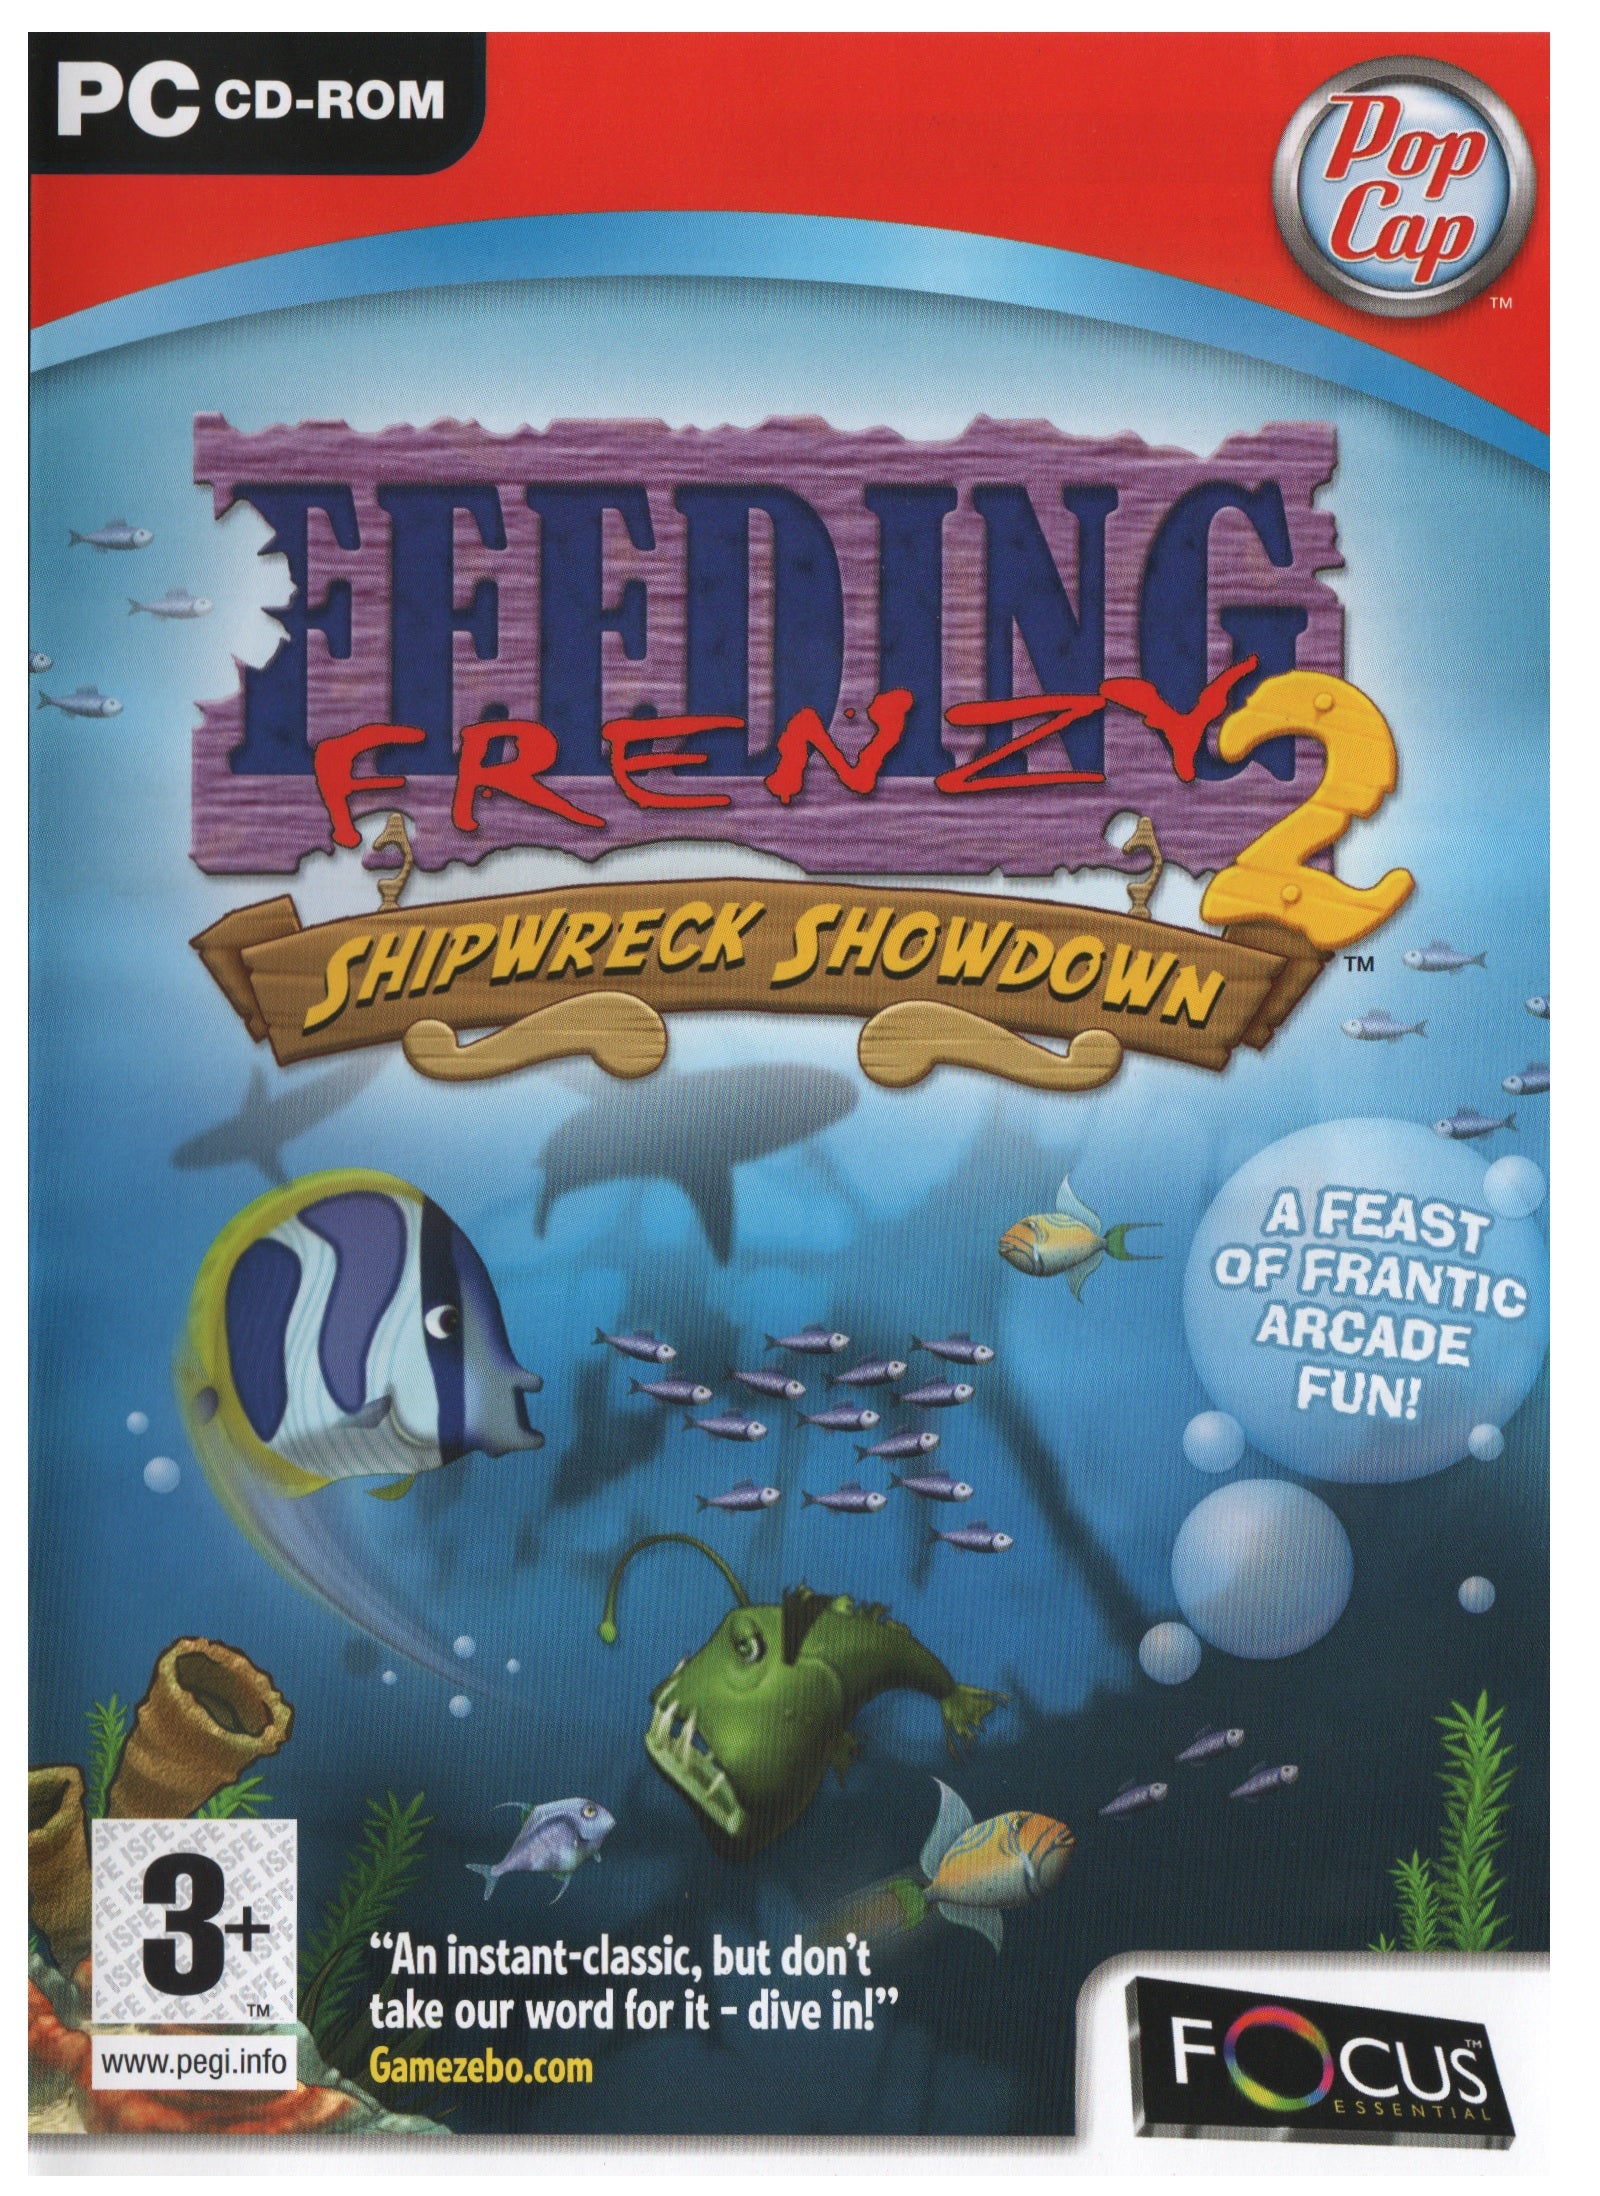 PopCap Feeding Frenzy 2 PC Game